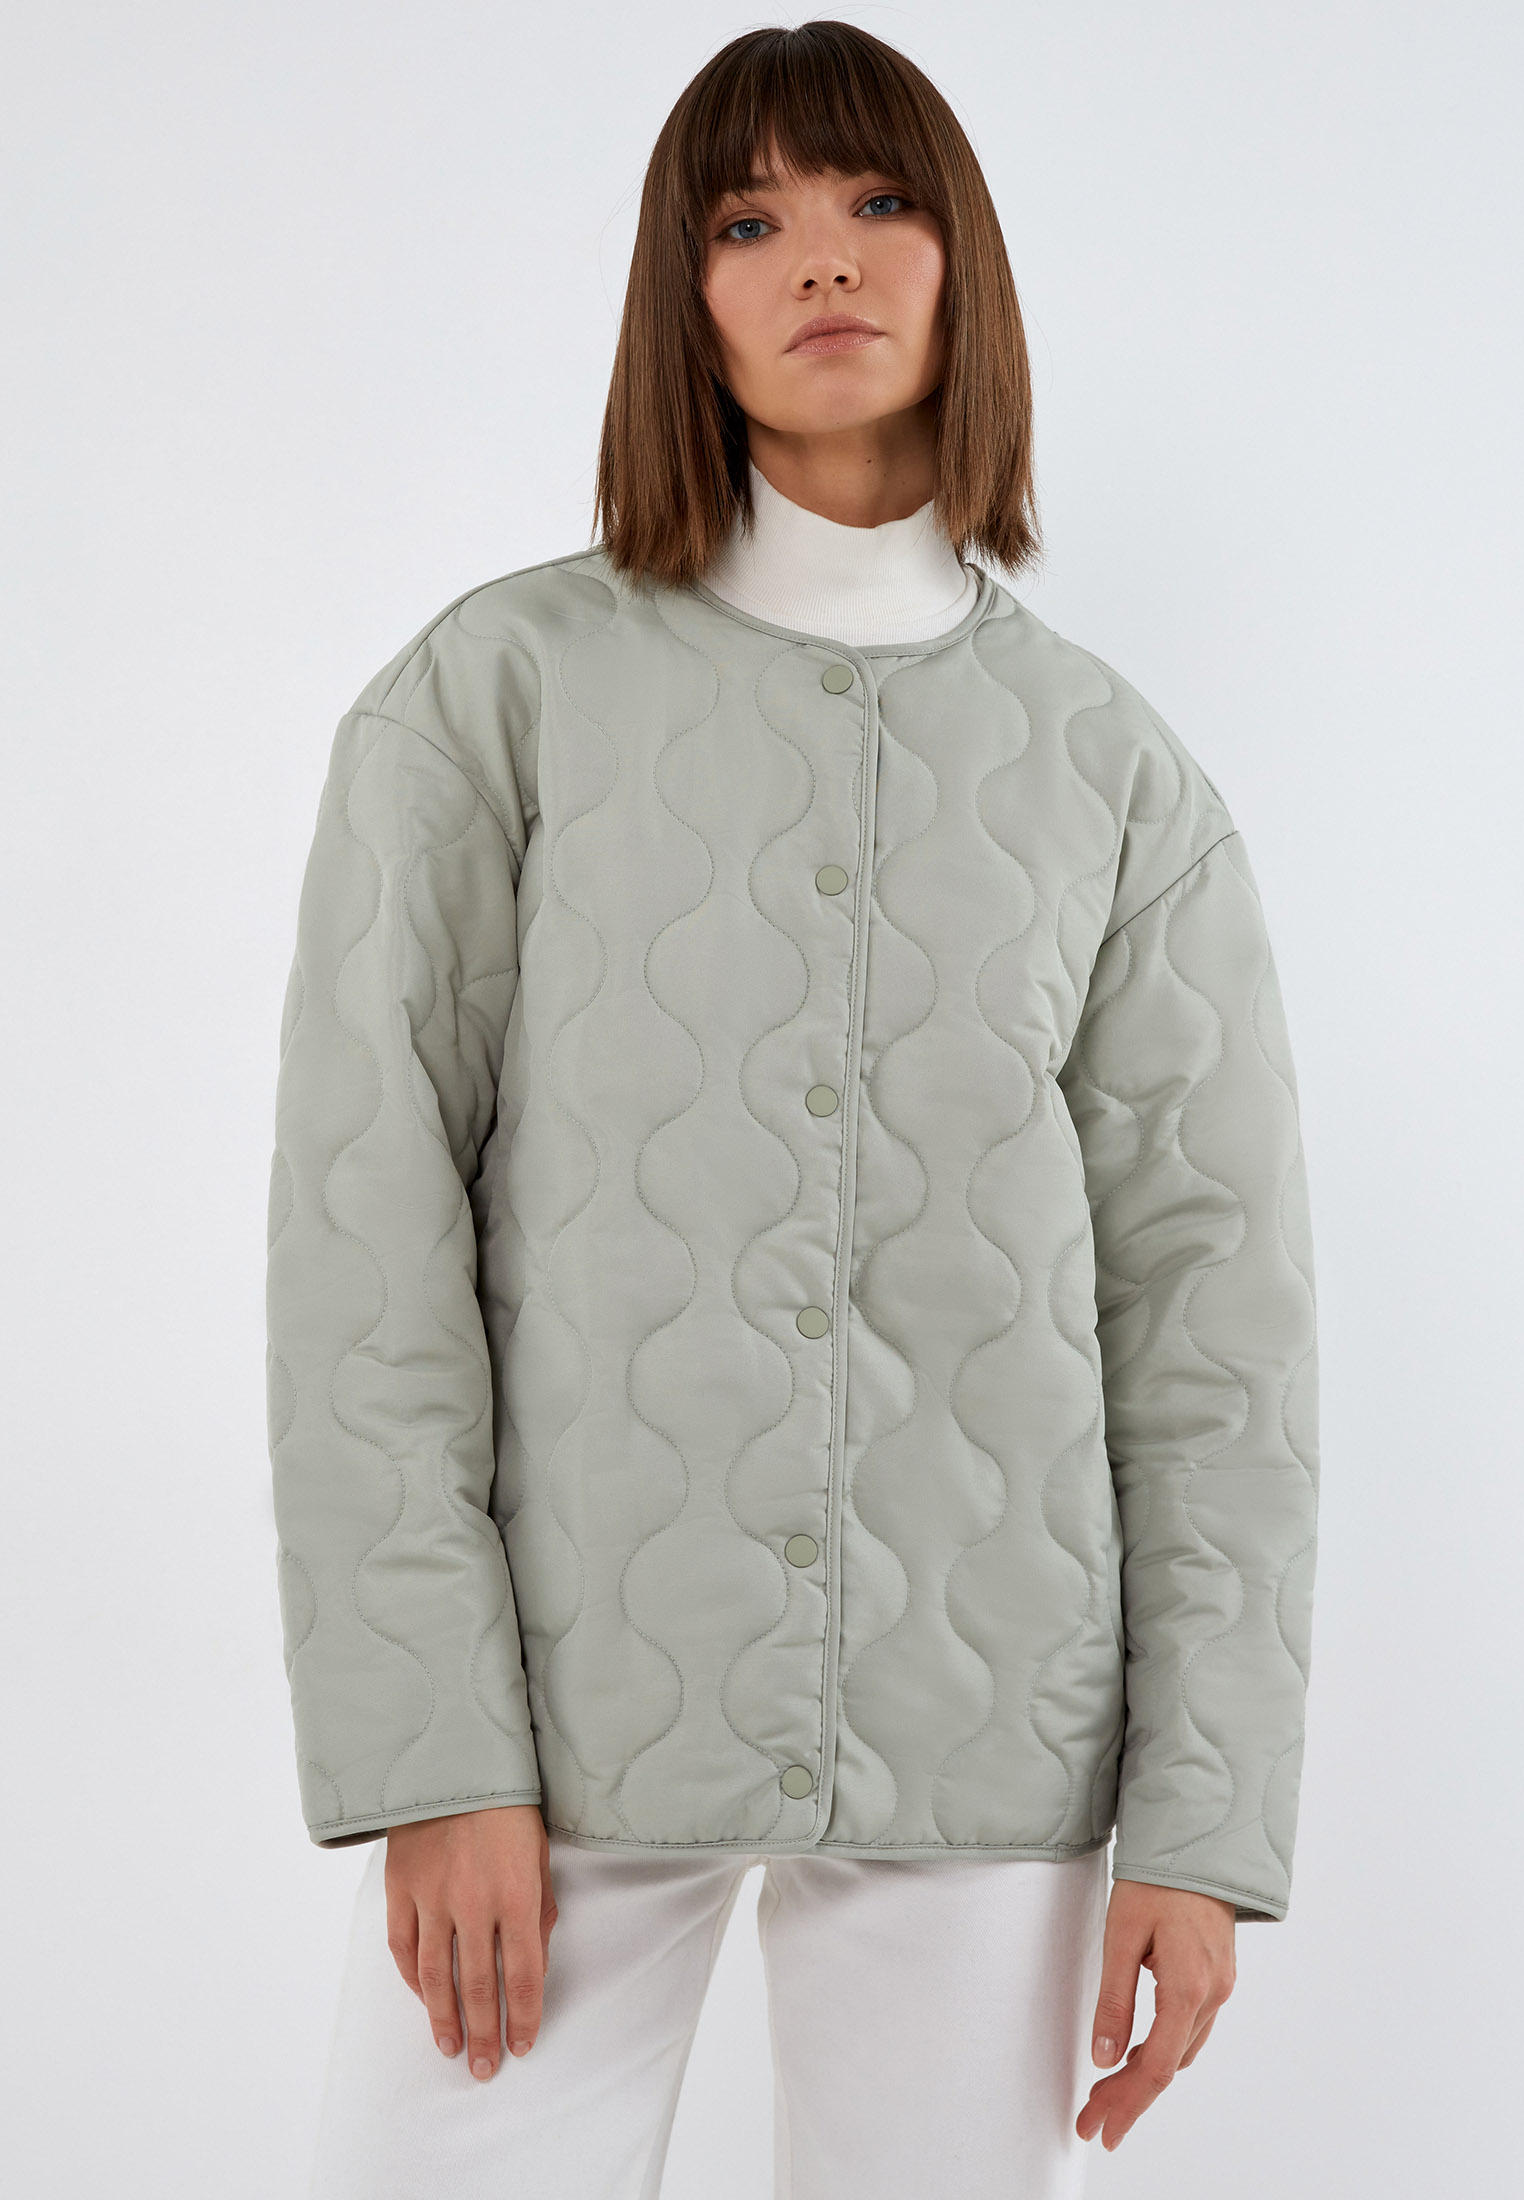 Куртка утепленная Zarina Exclusive online, цвет: хаки, MP002XW0BJJZ — купить в интернет-магазине Lamoda